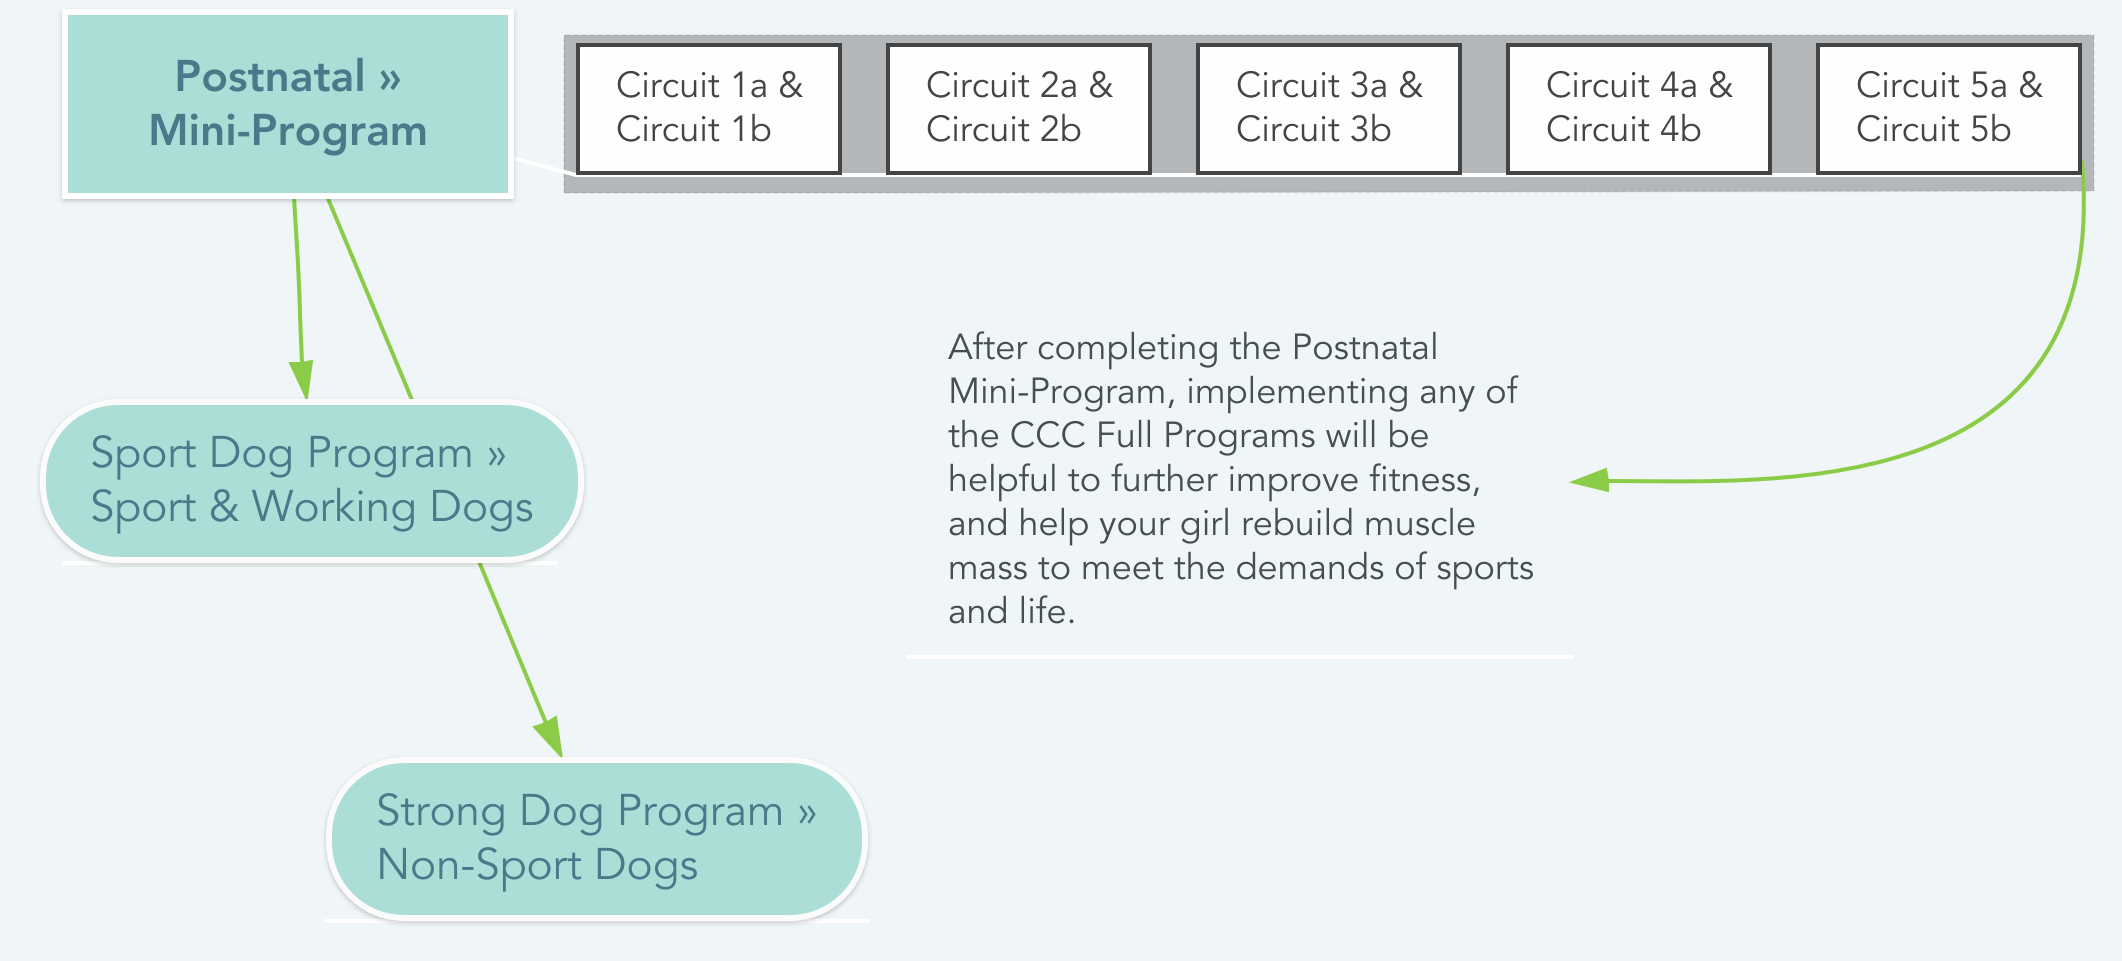 Graphic showing the progression through the Postnatal Mini-Program